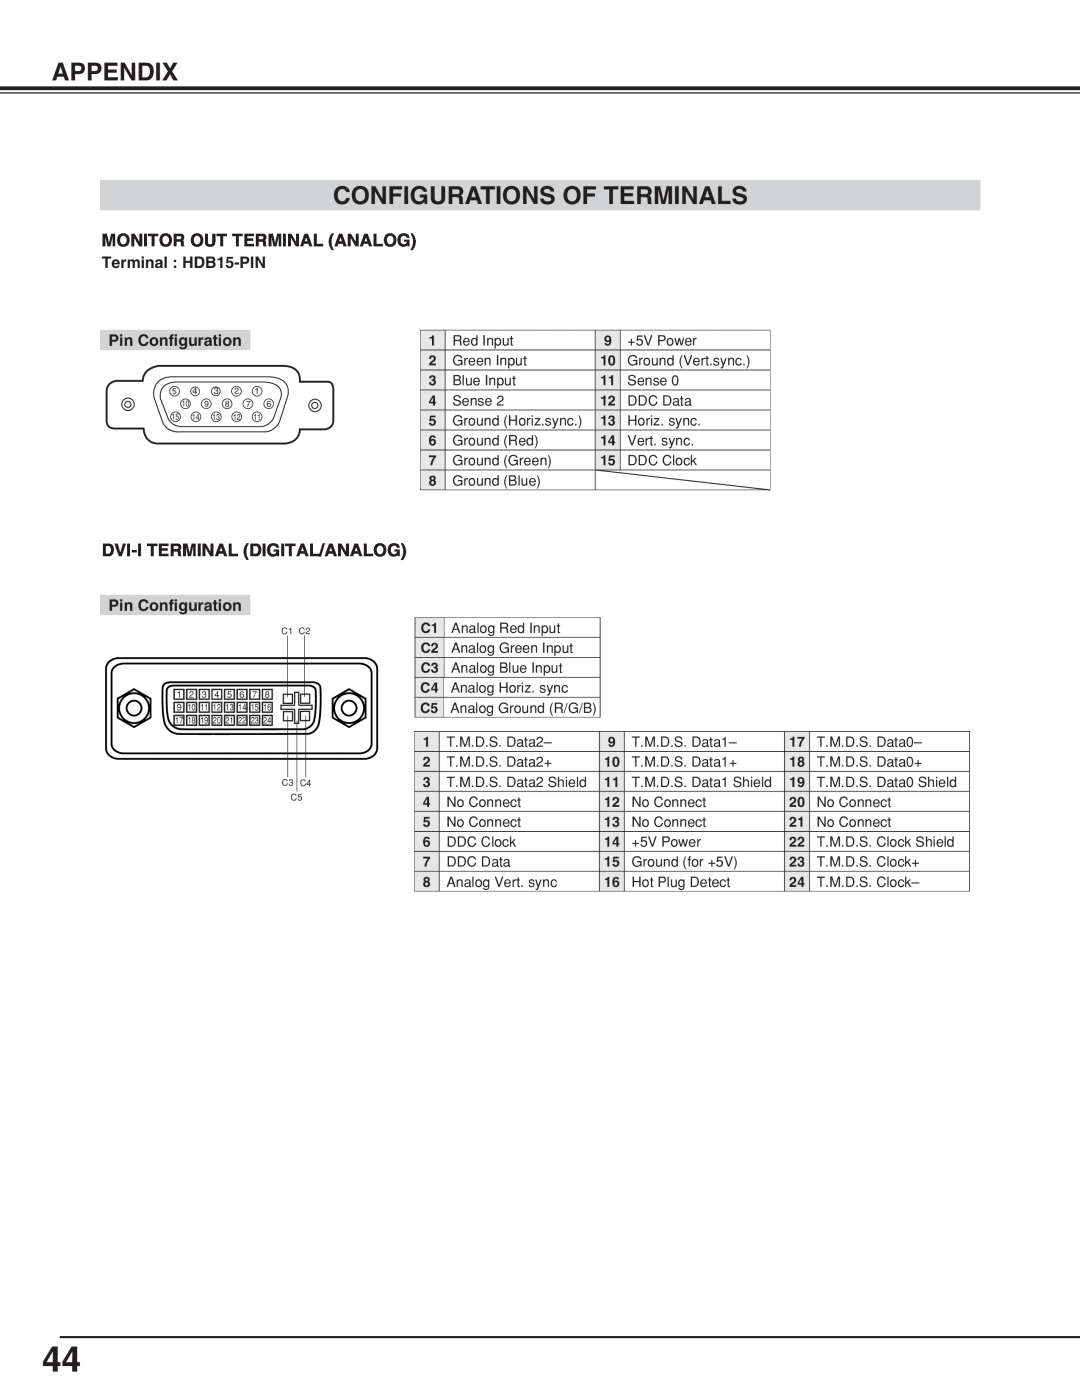 BOXLIGHT CP-306t manual Appendix Configurations Of Terminals, Monitor Out Terminal Analog, Dvi-I Terminal Digital/Analog 